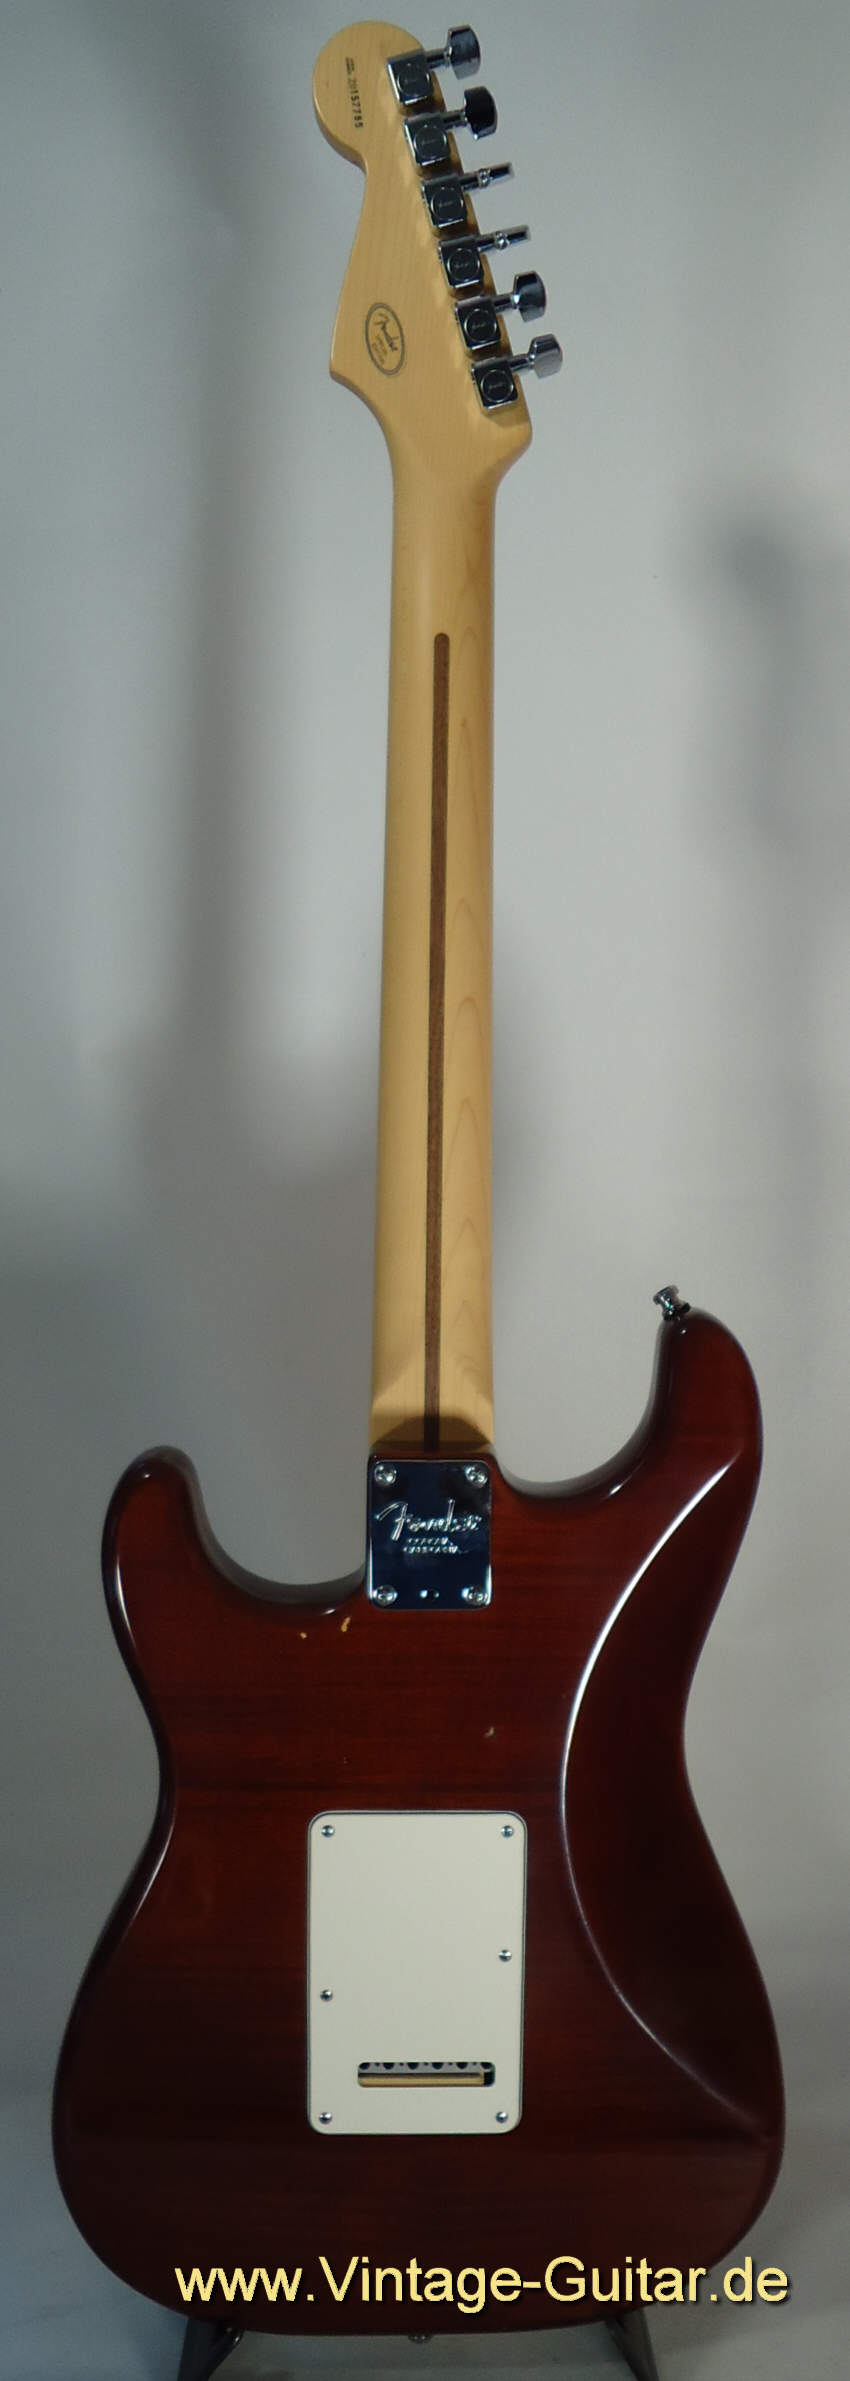 Fender Stratocaster Special Edition 2.jpg